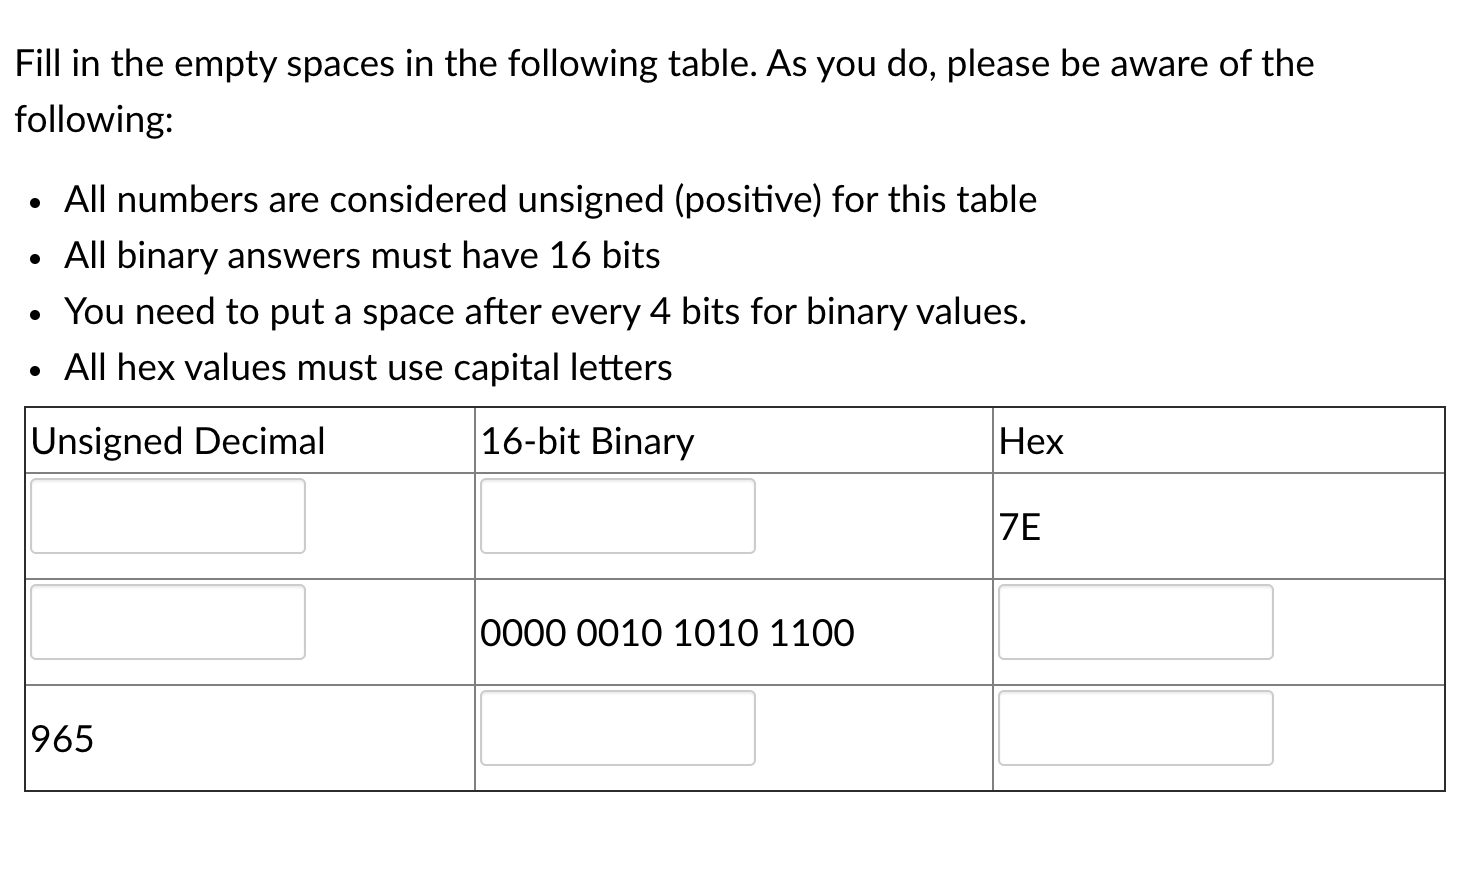 Unsigned Decimal
16-bit Binary
Нех
7E
0000 0010 1010 1100
965
